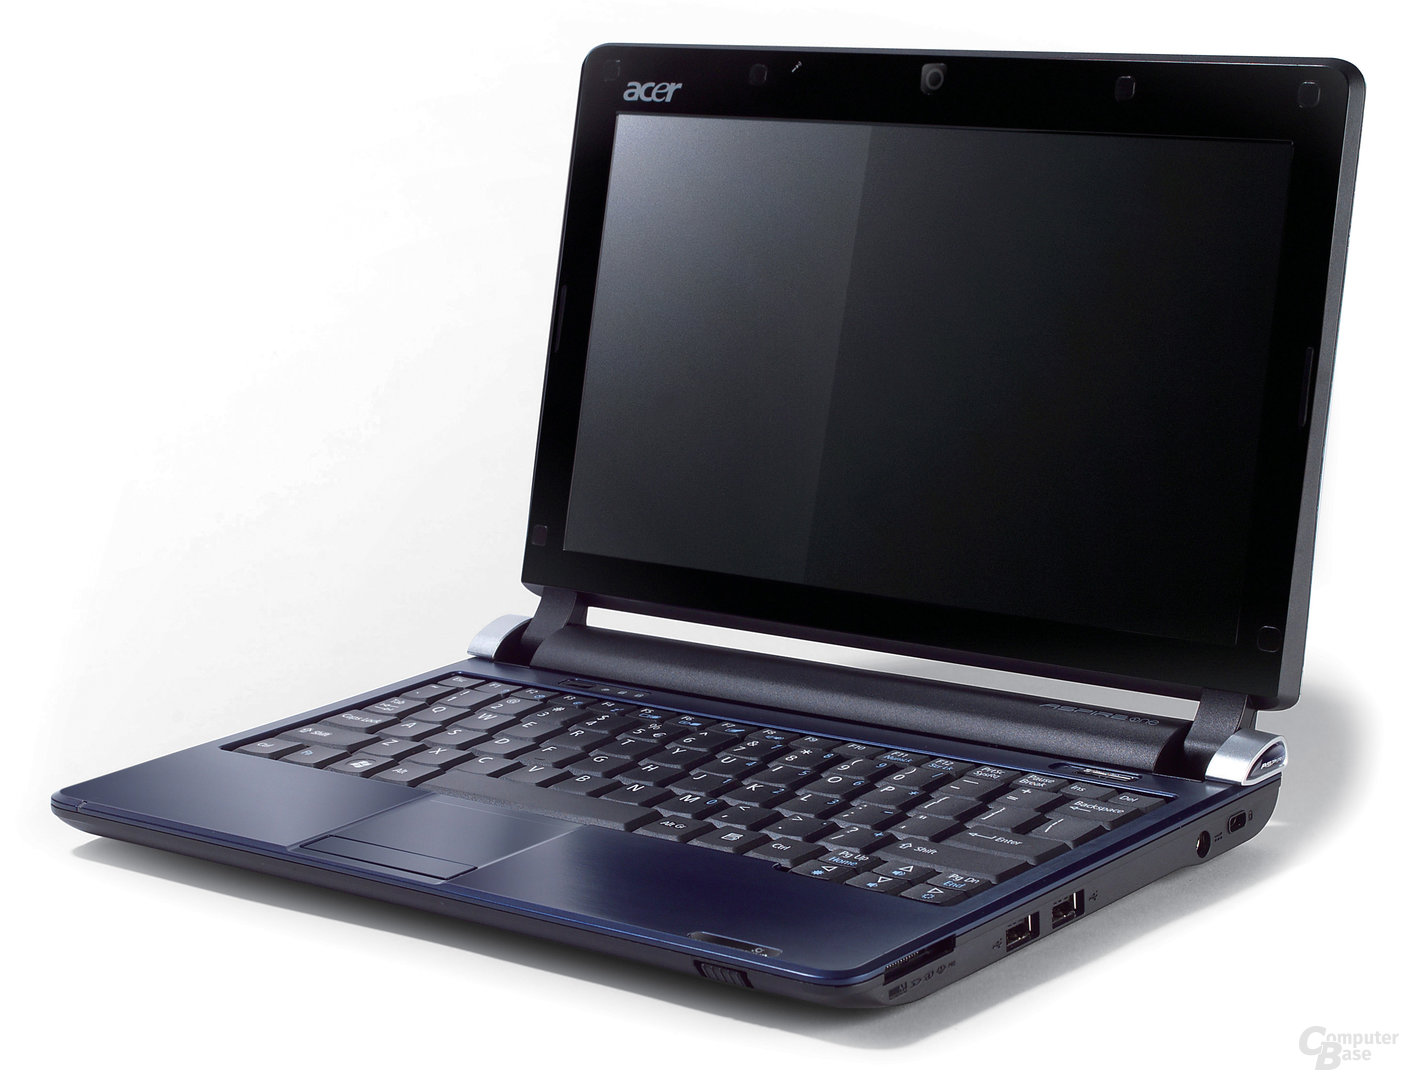 Acer Aspire one D250 in blau